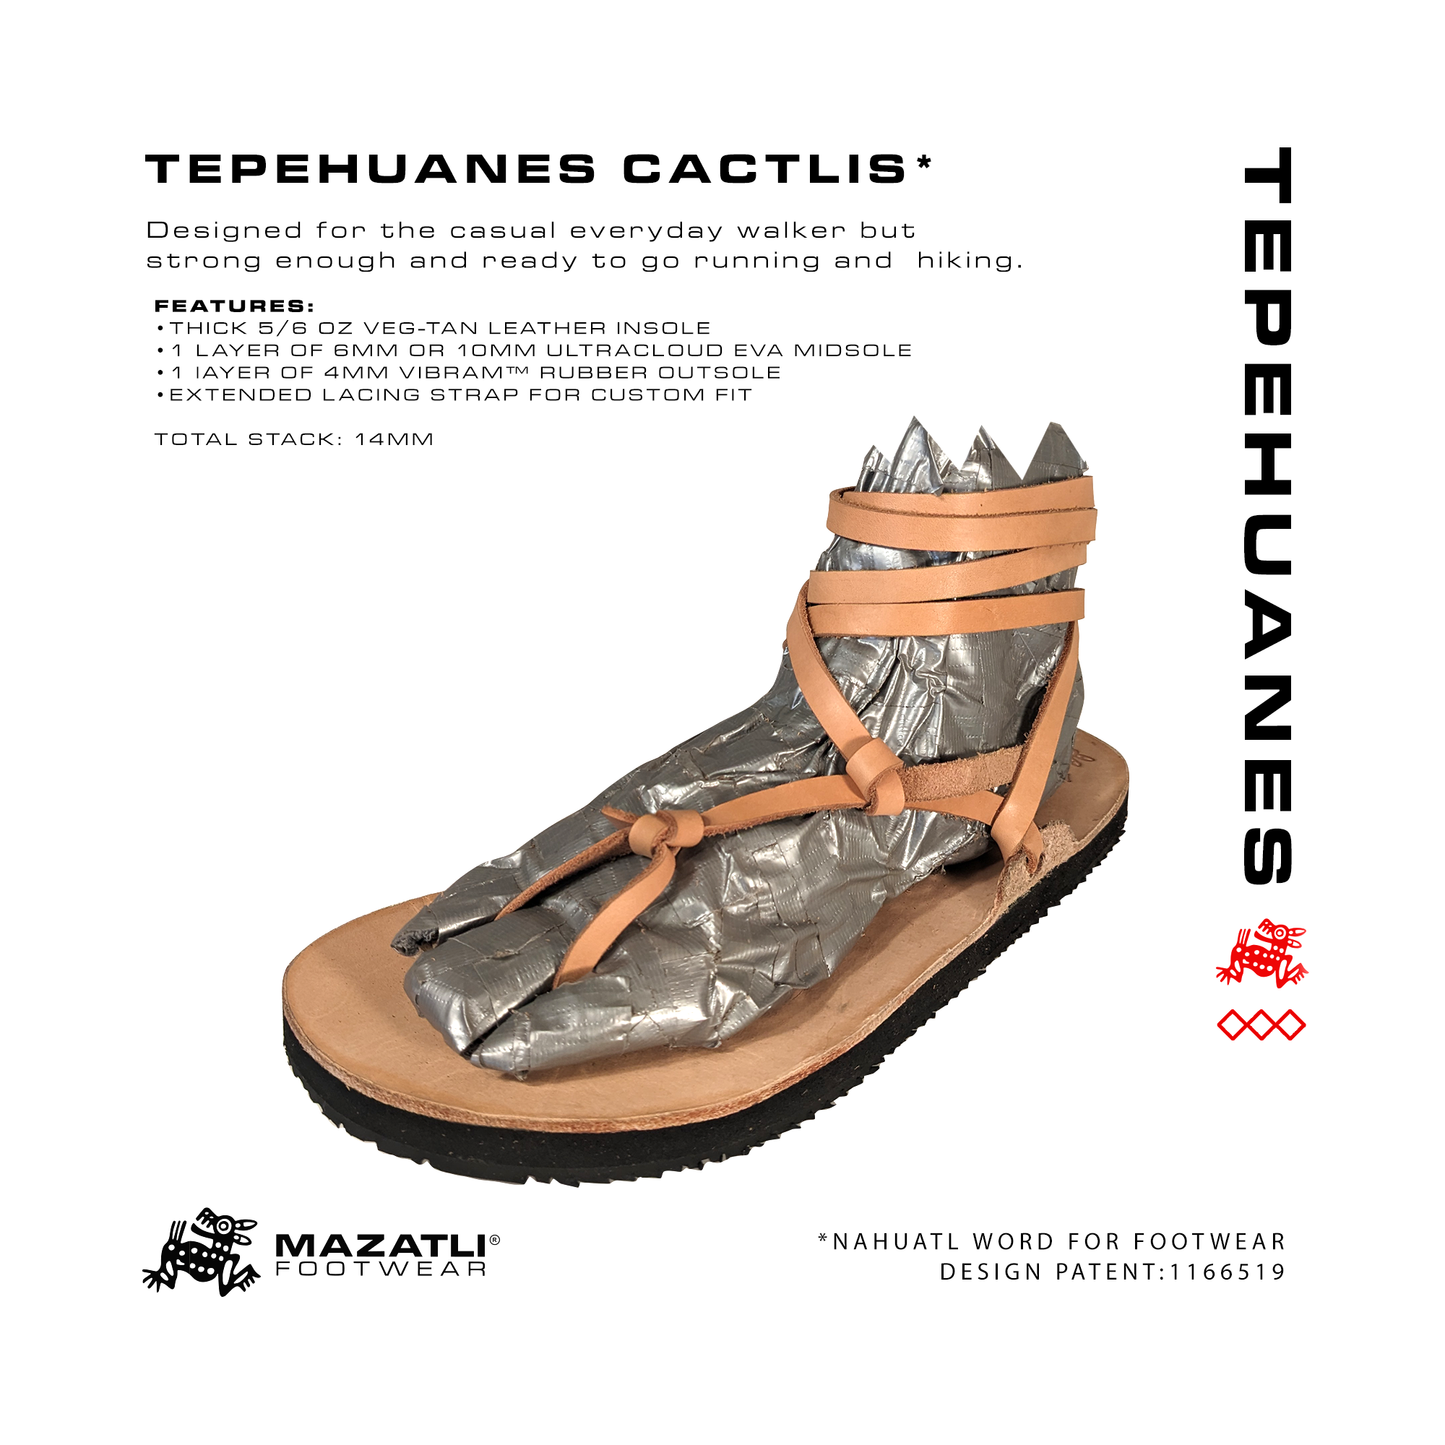 Mazatli "Tepehuanes" Running Huaraches Cactlis